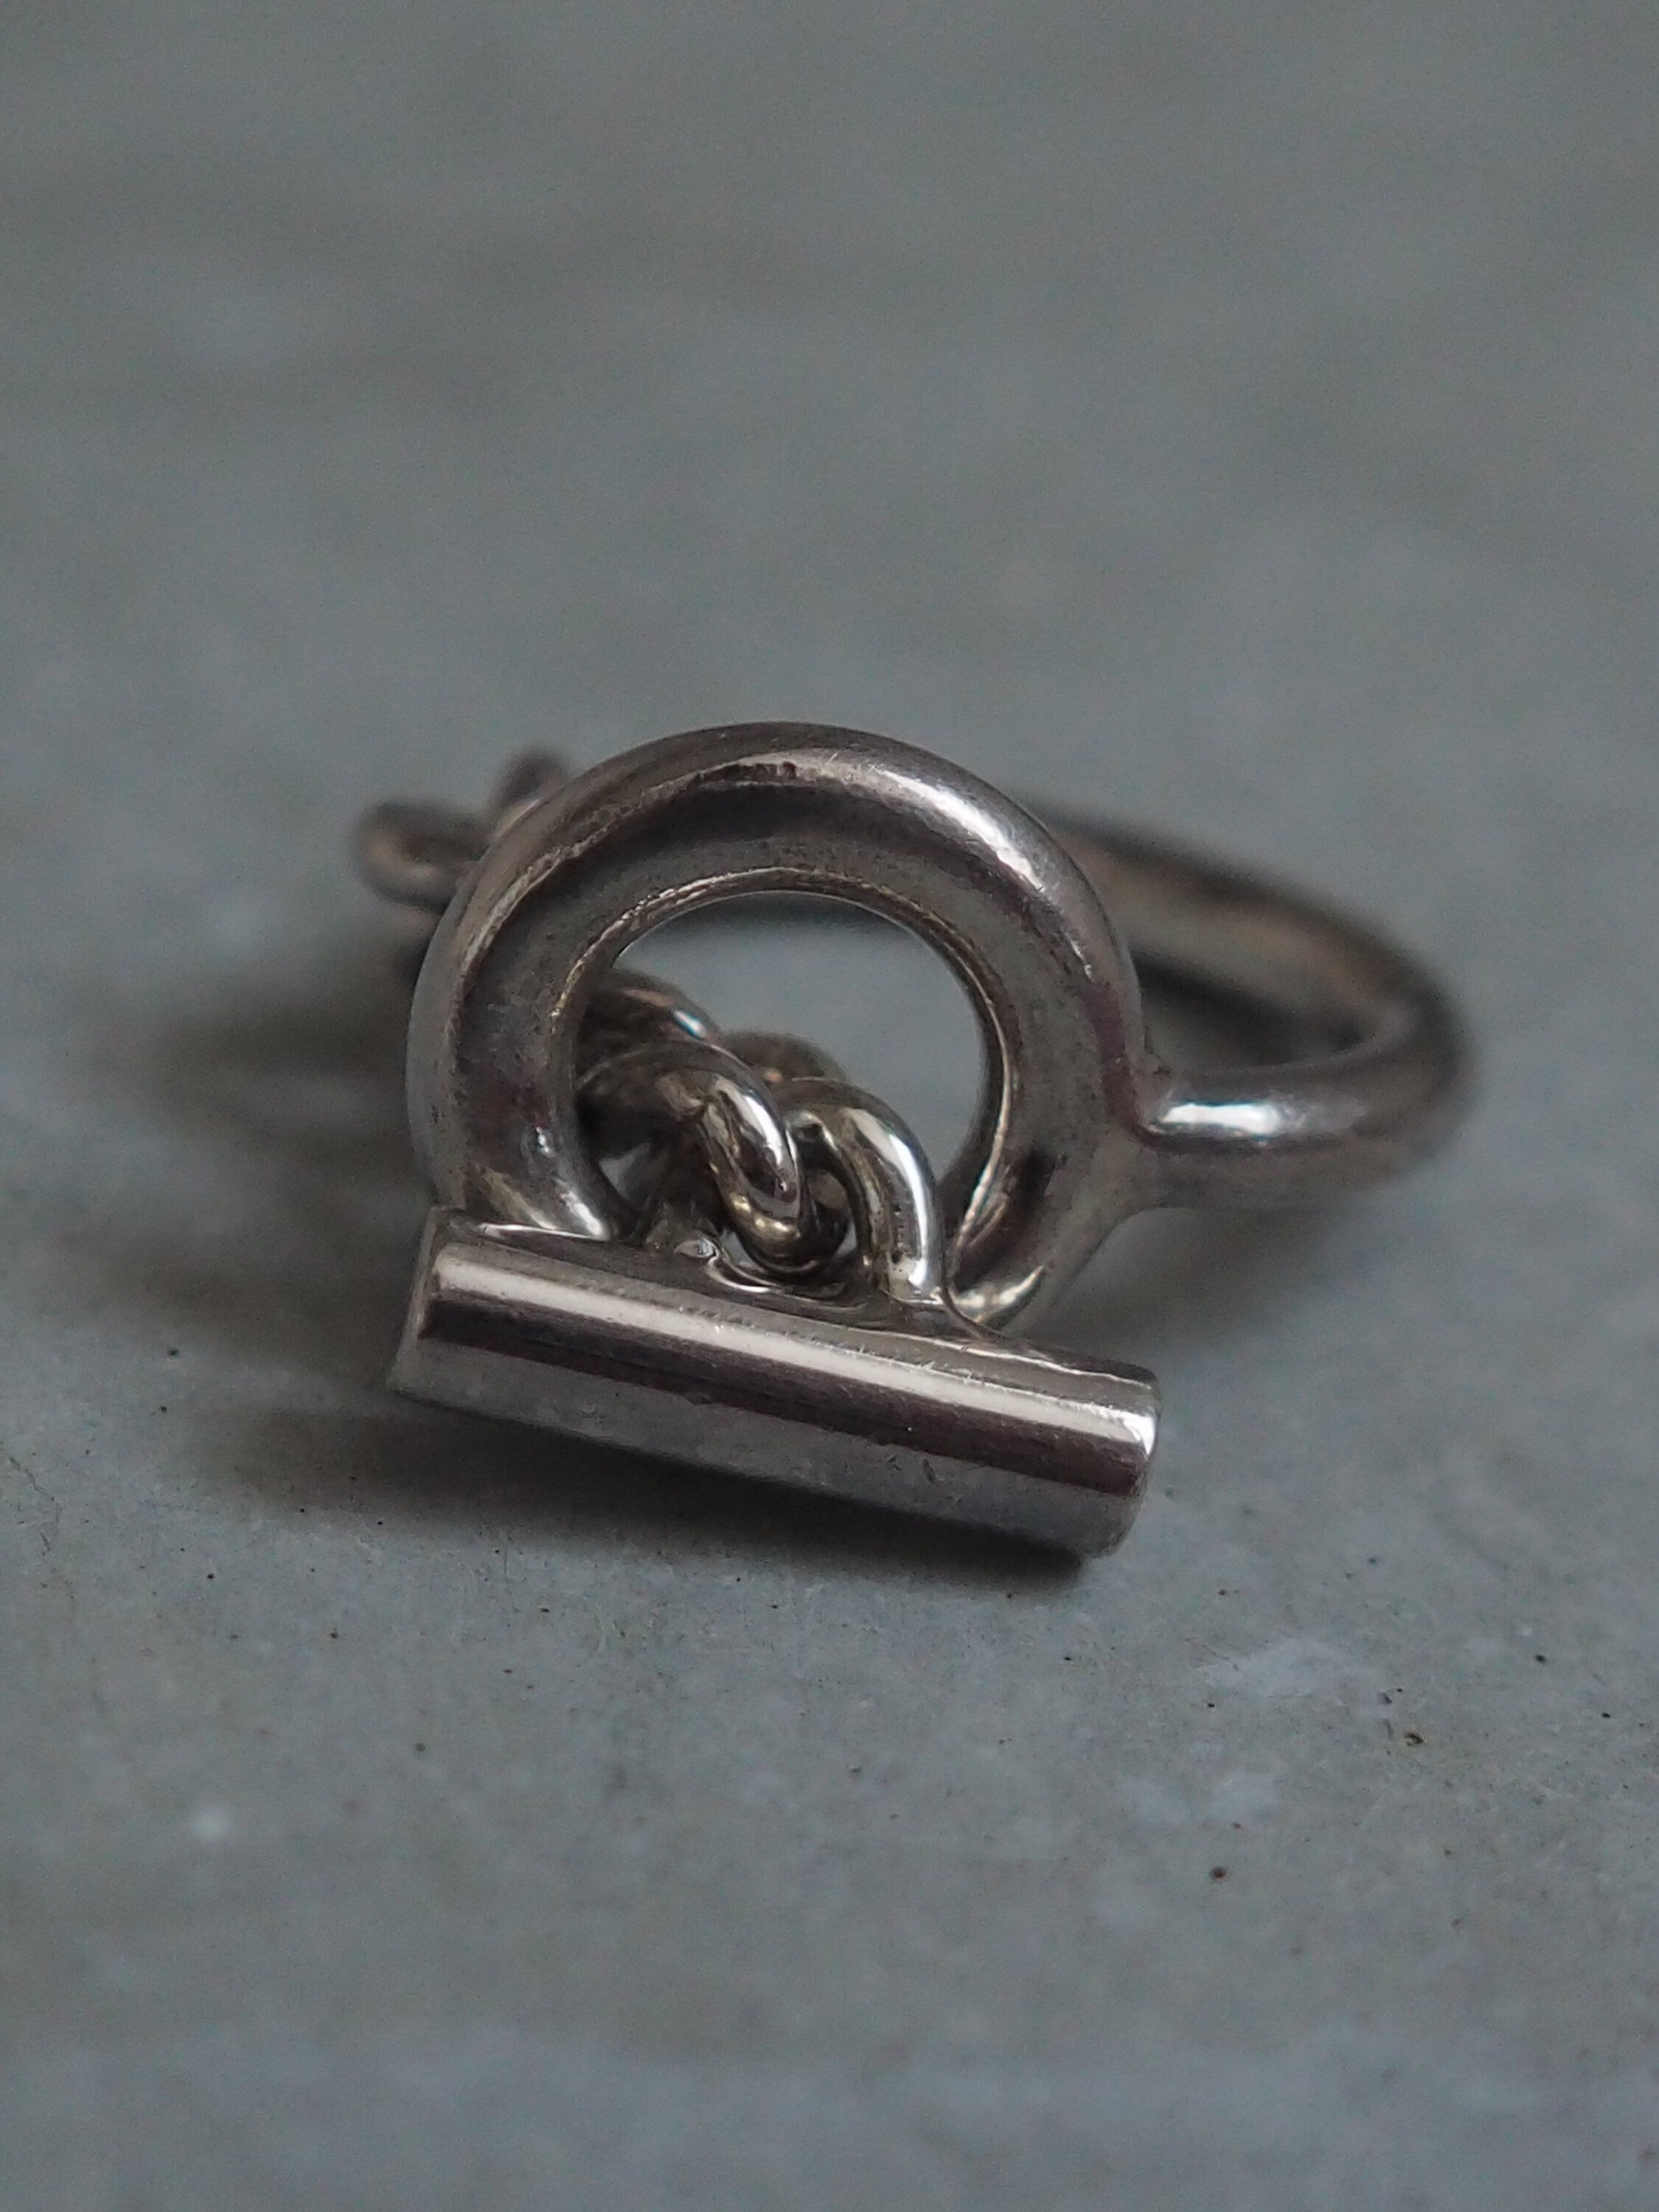 HERMES Croisette Ring SV 925 Silver size (US) 6.0 Vintage Authentic